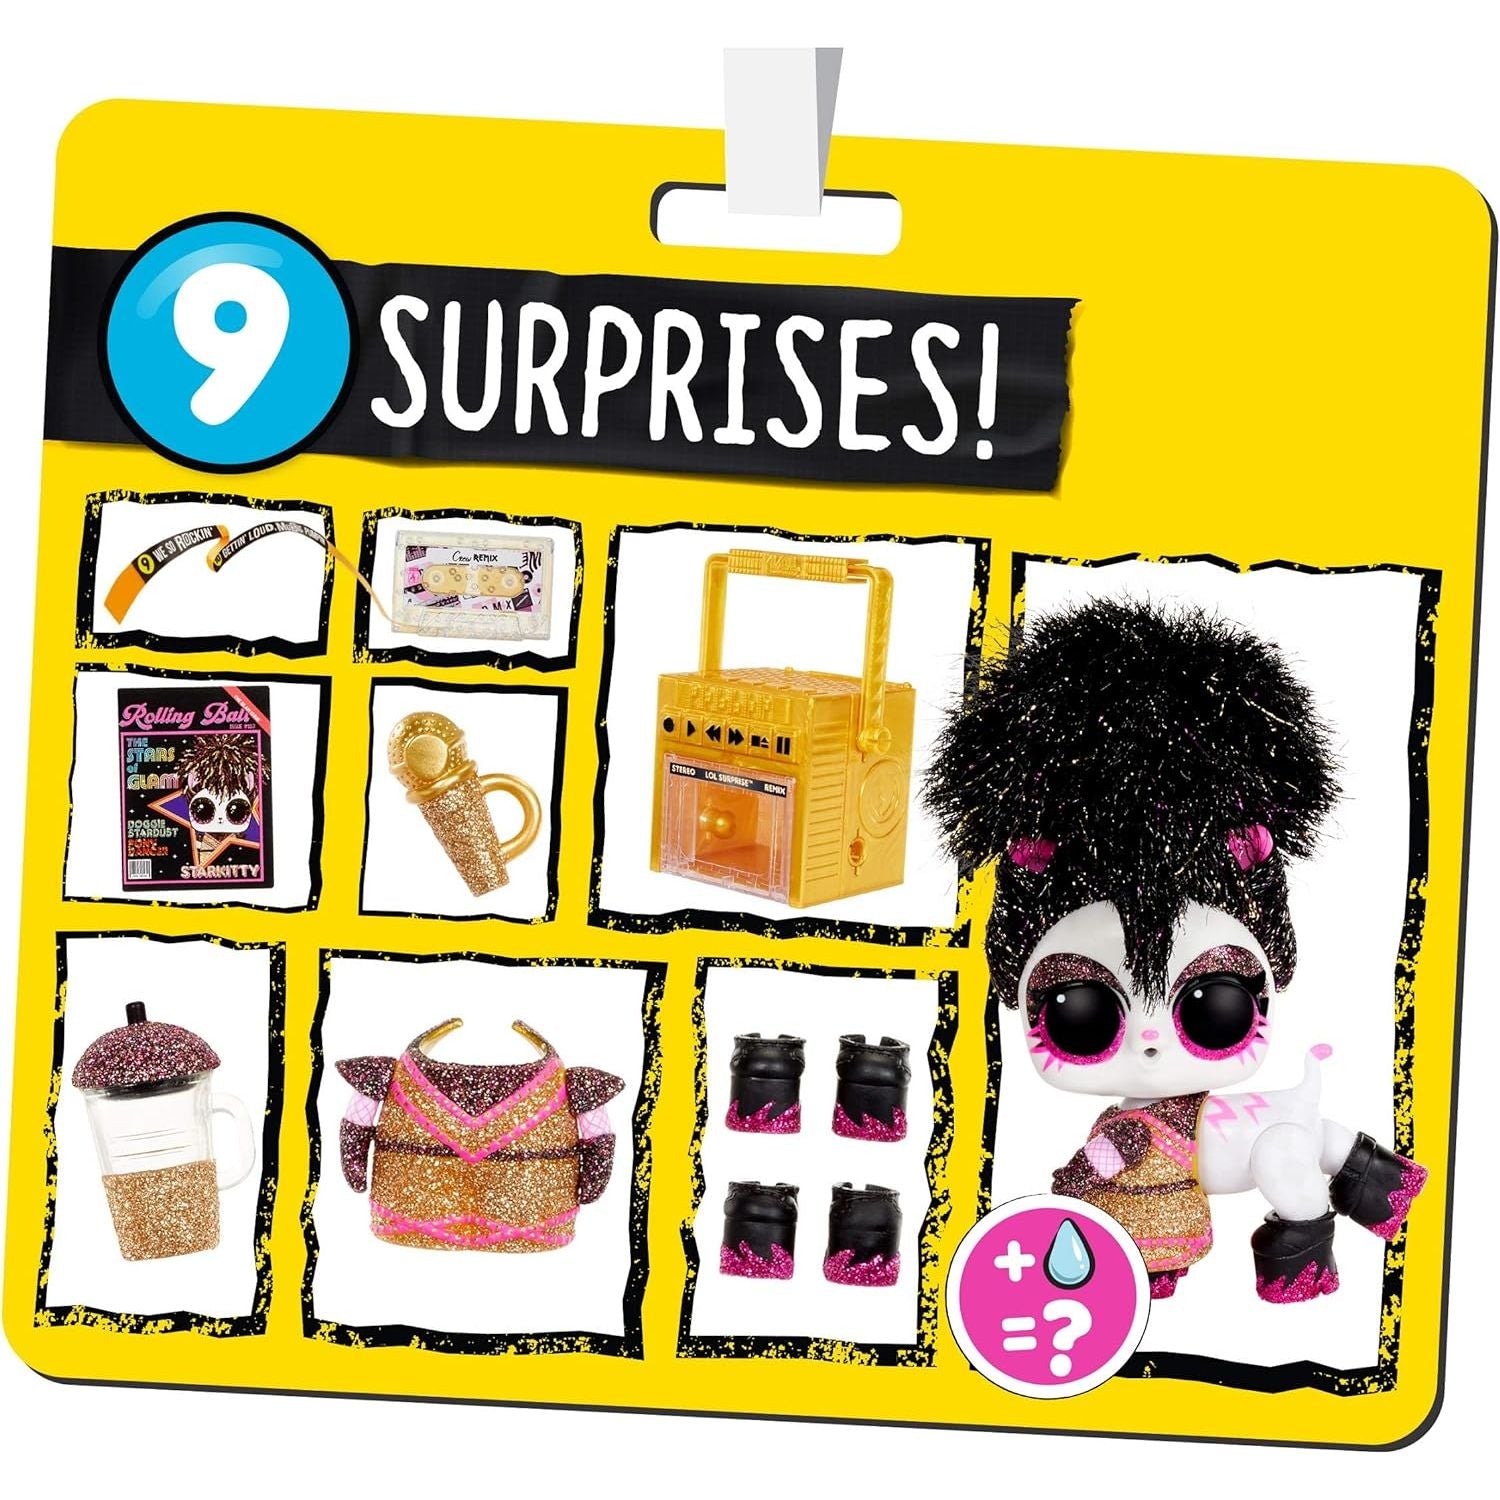 Lol surprise remix pets 9 surprises, real hair includes music cassette tape with surprise song lyrics, accessories, dolls